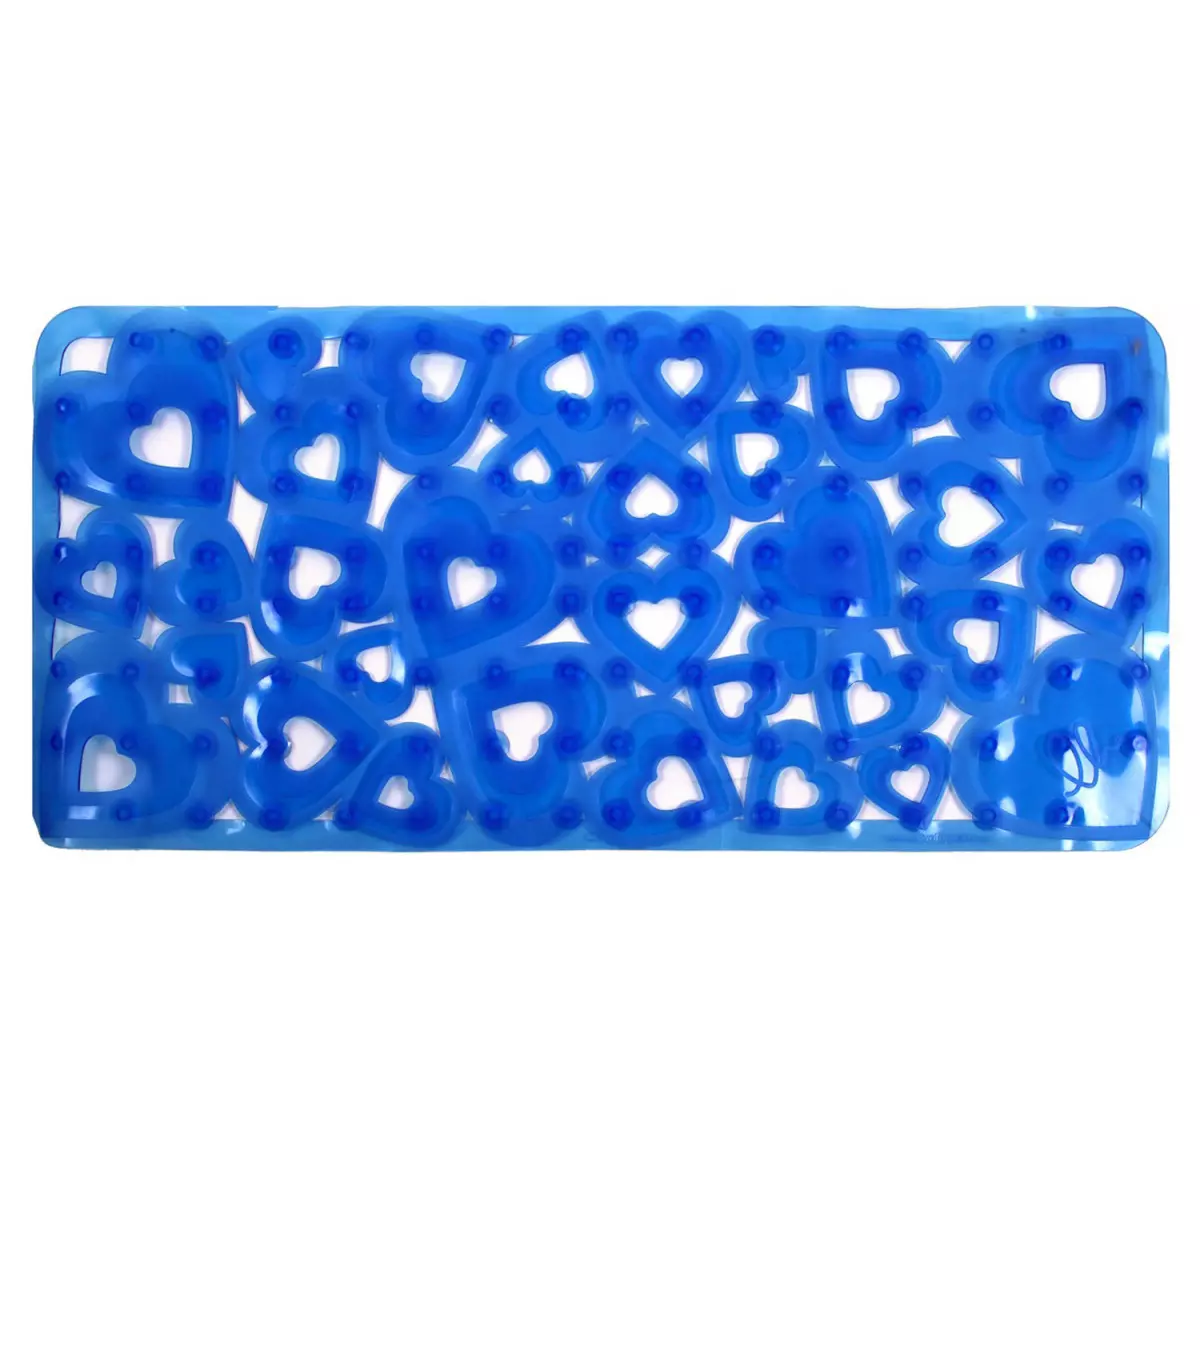 https://olivo.shop/7775-superlarge_default/ventosa-non-slip-and-mold-proof-rubber-bath-mat-with-heart-design-blue-36x72-cm.webp